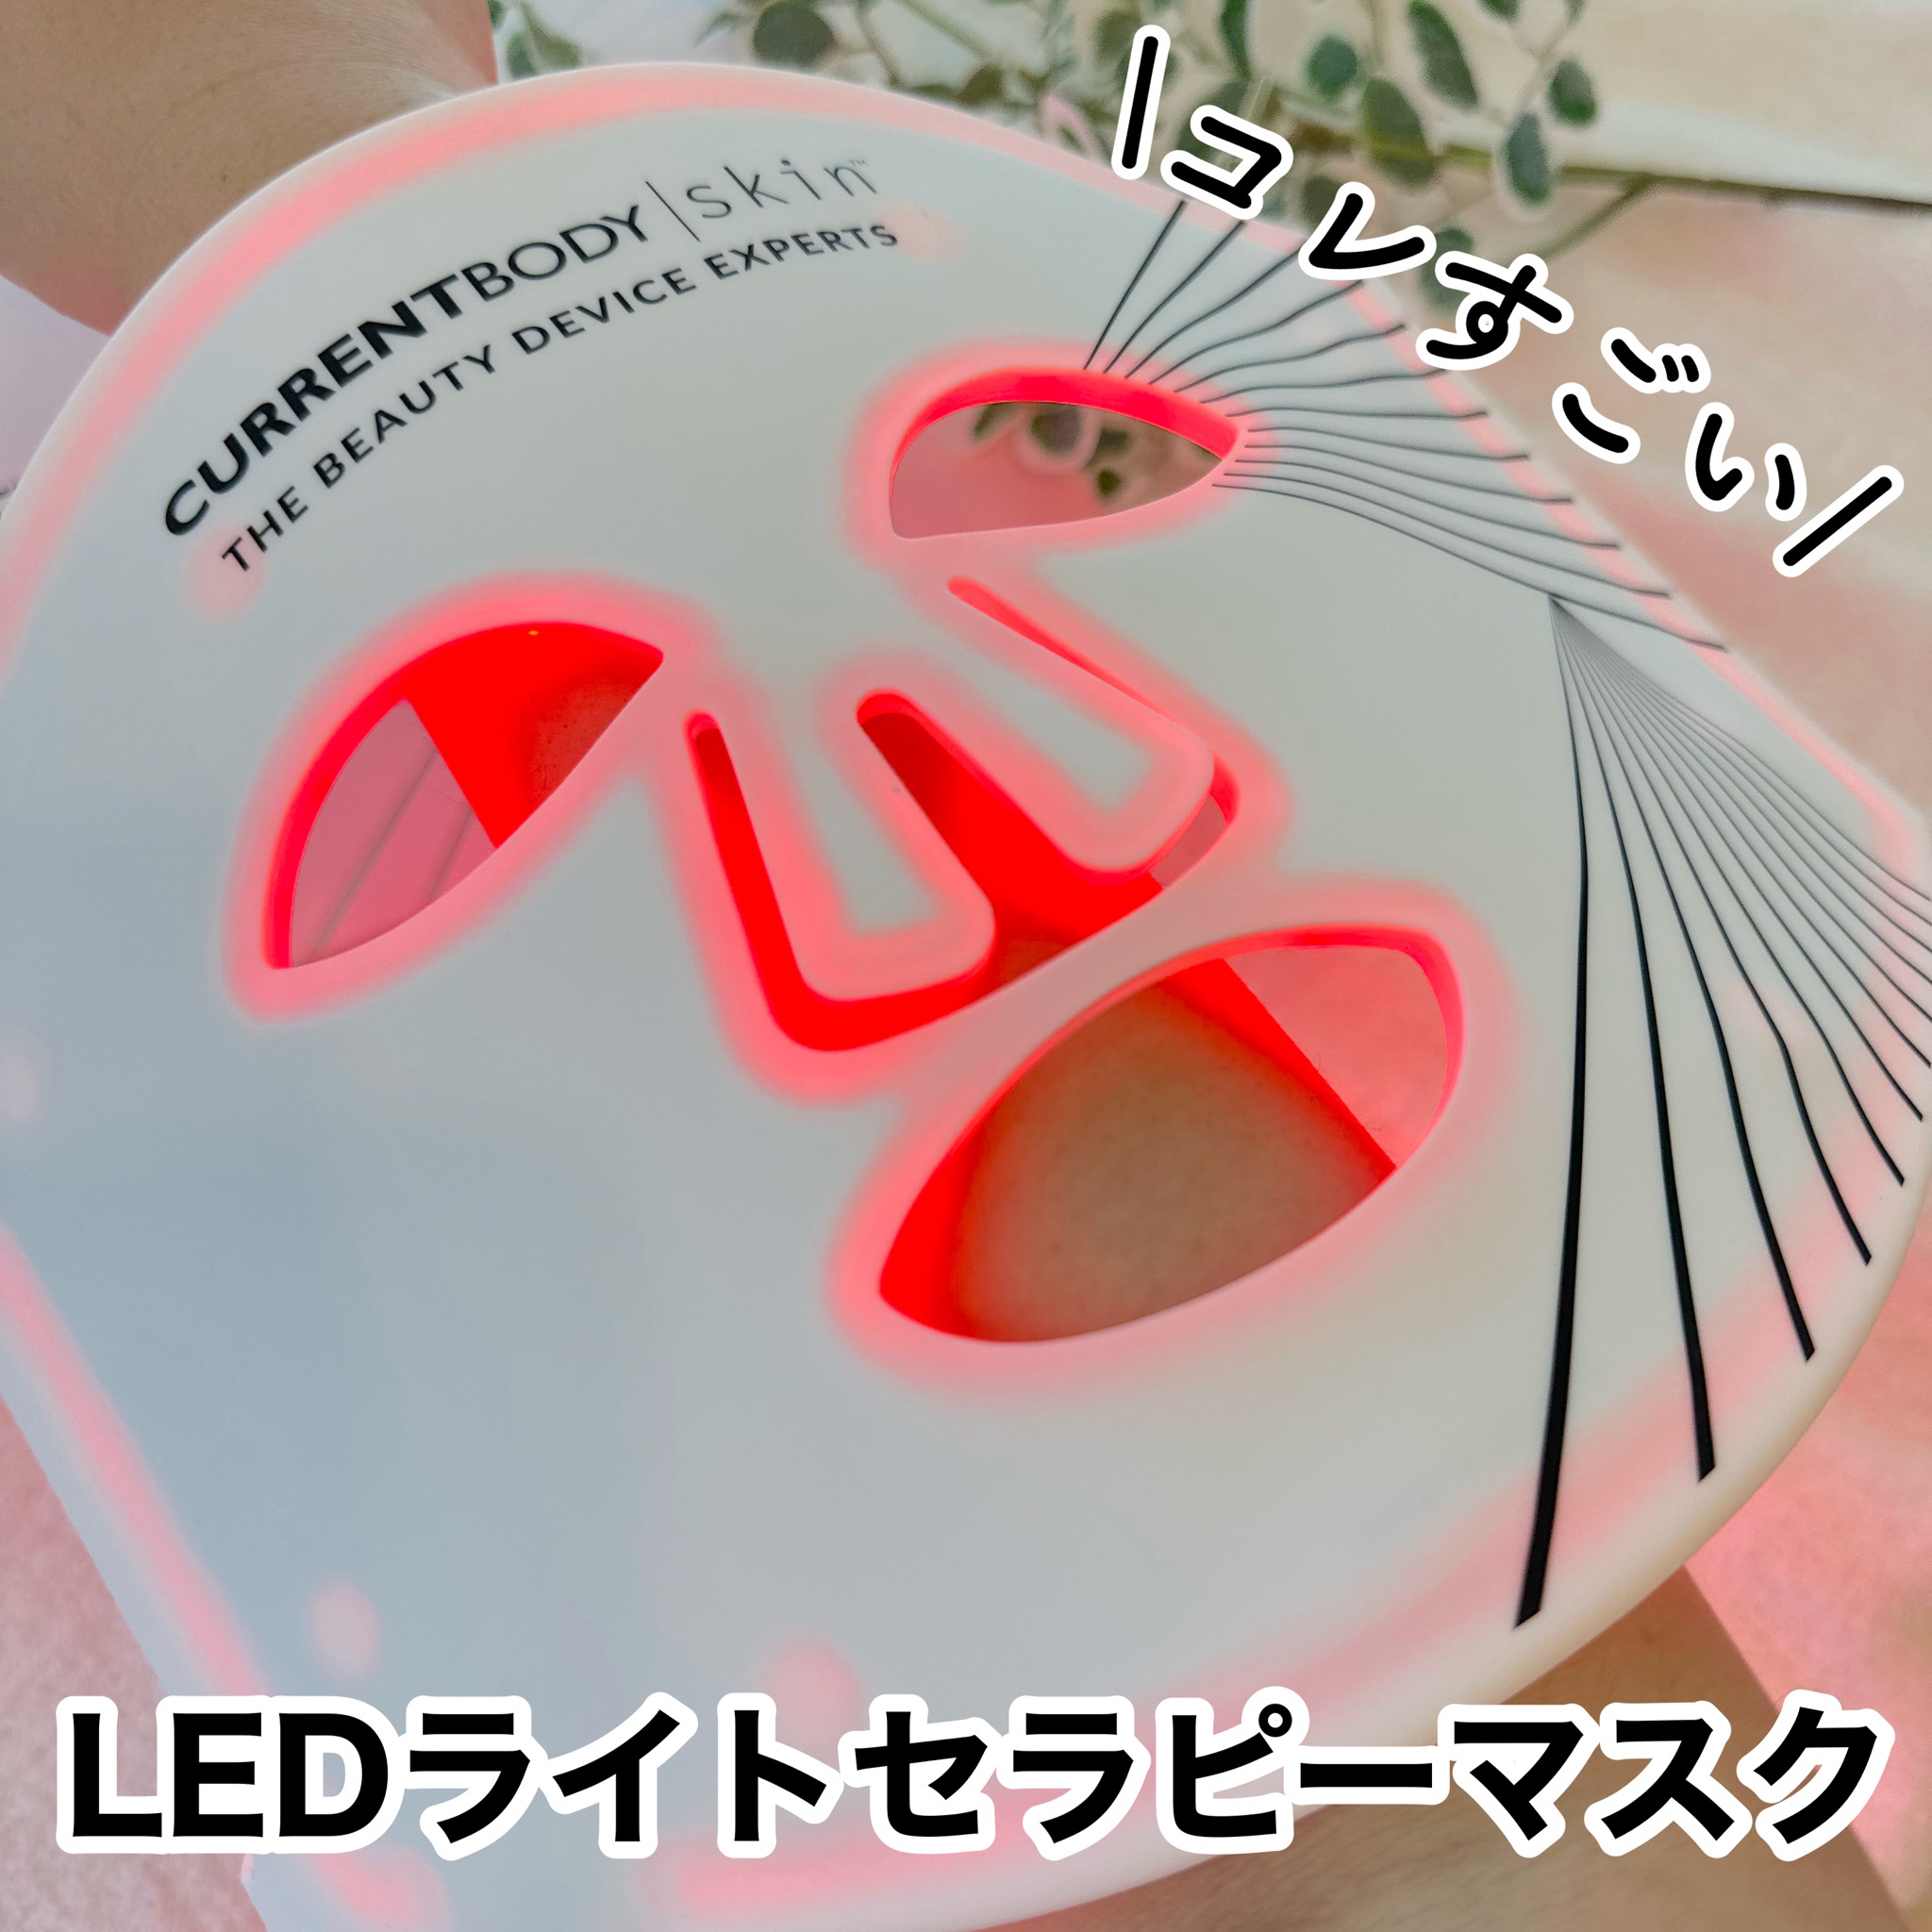 CurrentBody Skin / CurrentBody Skin LED ライトセラピーマスクの商品